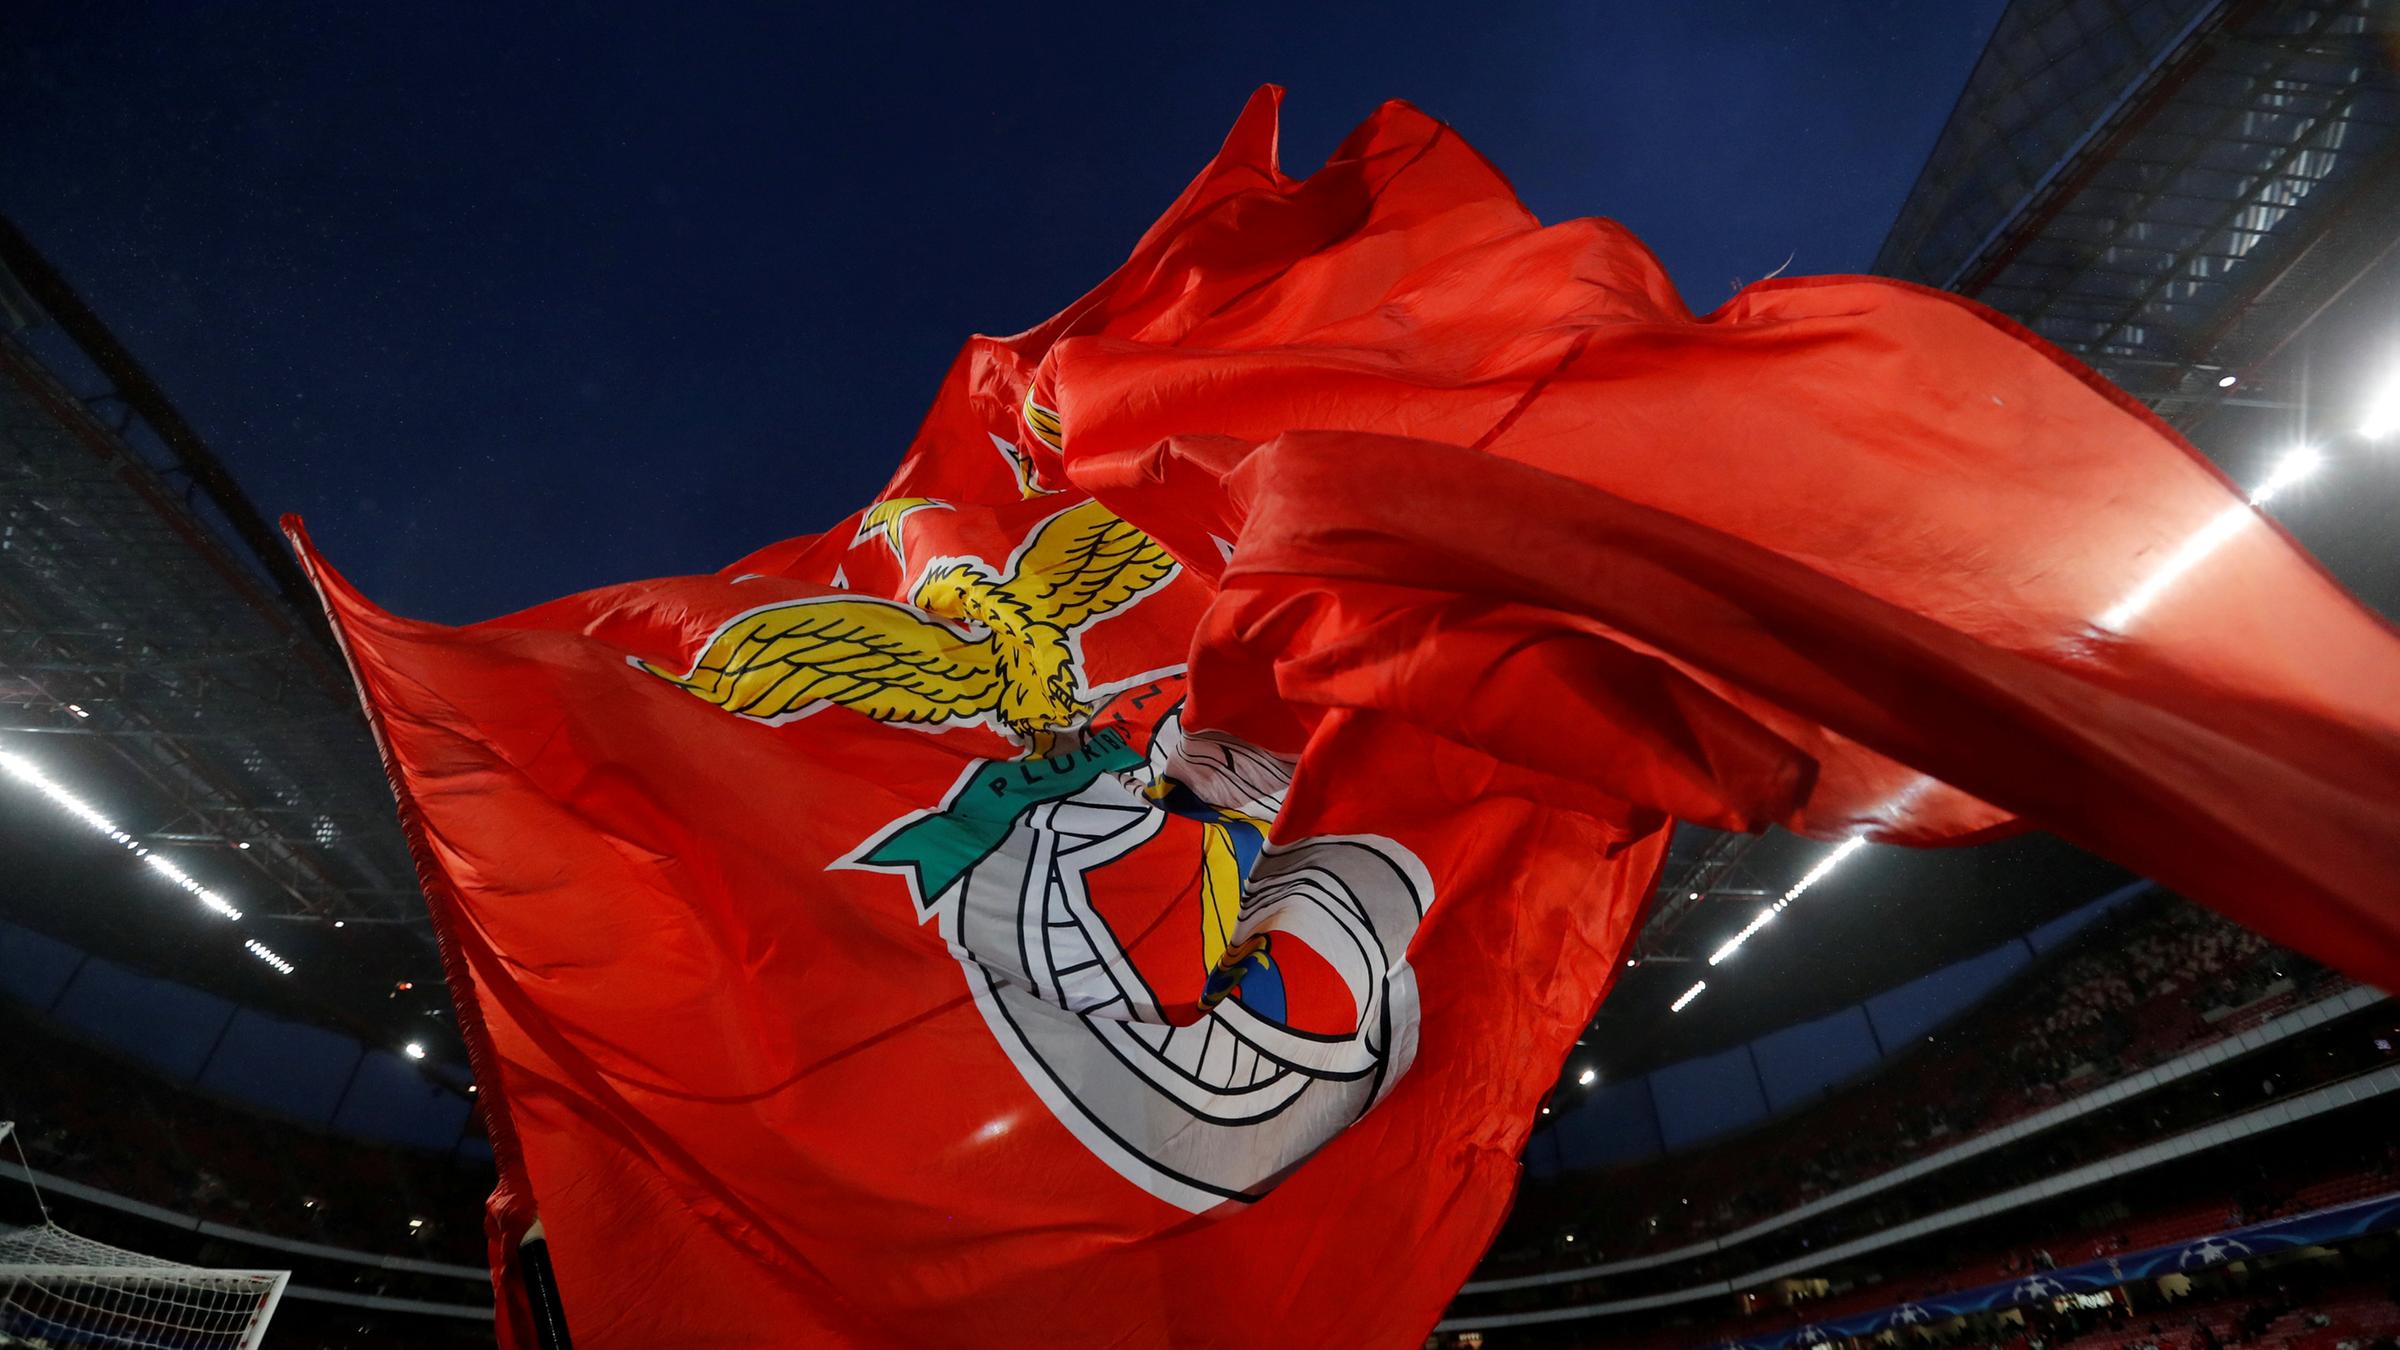 Skandalnudel Benfica In Der Klemme Zdfmediathek